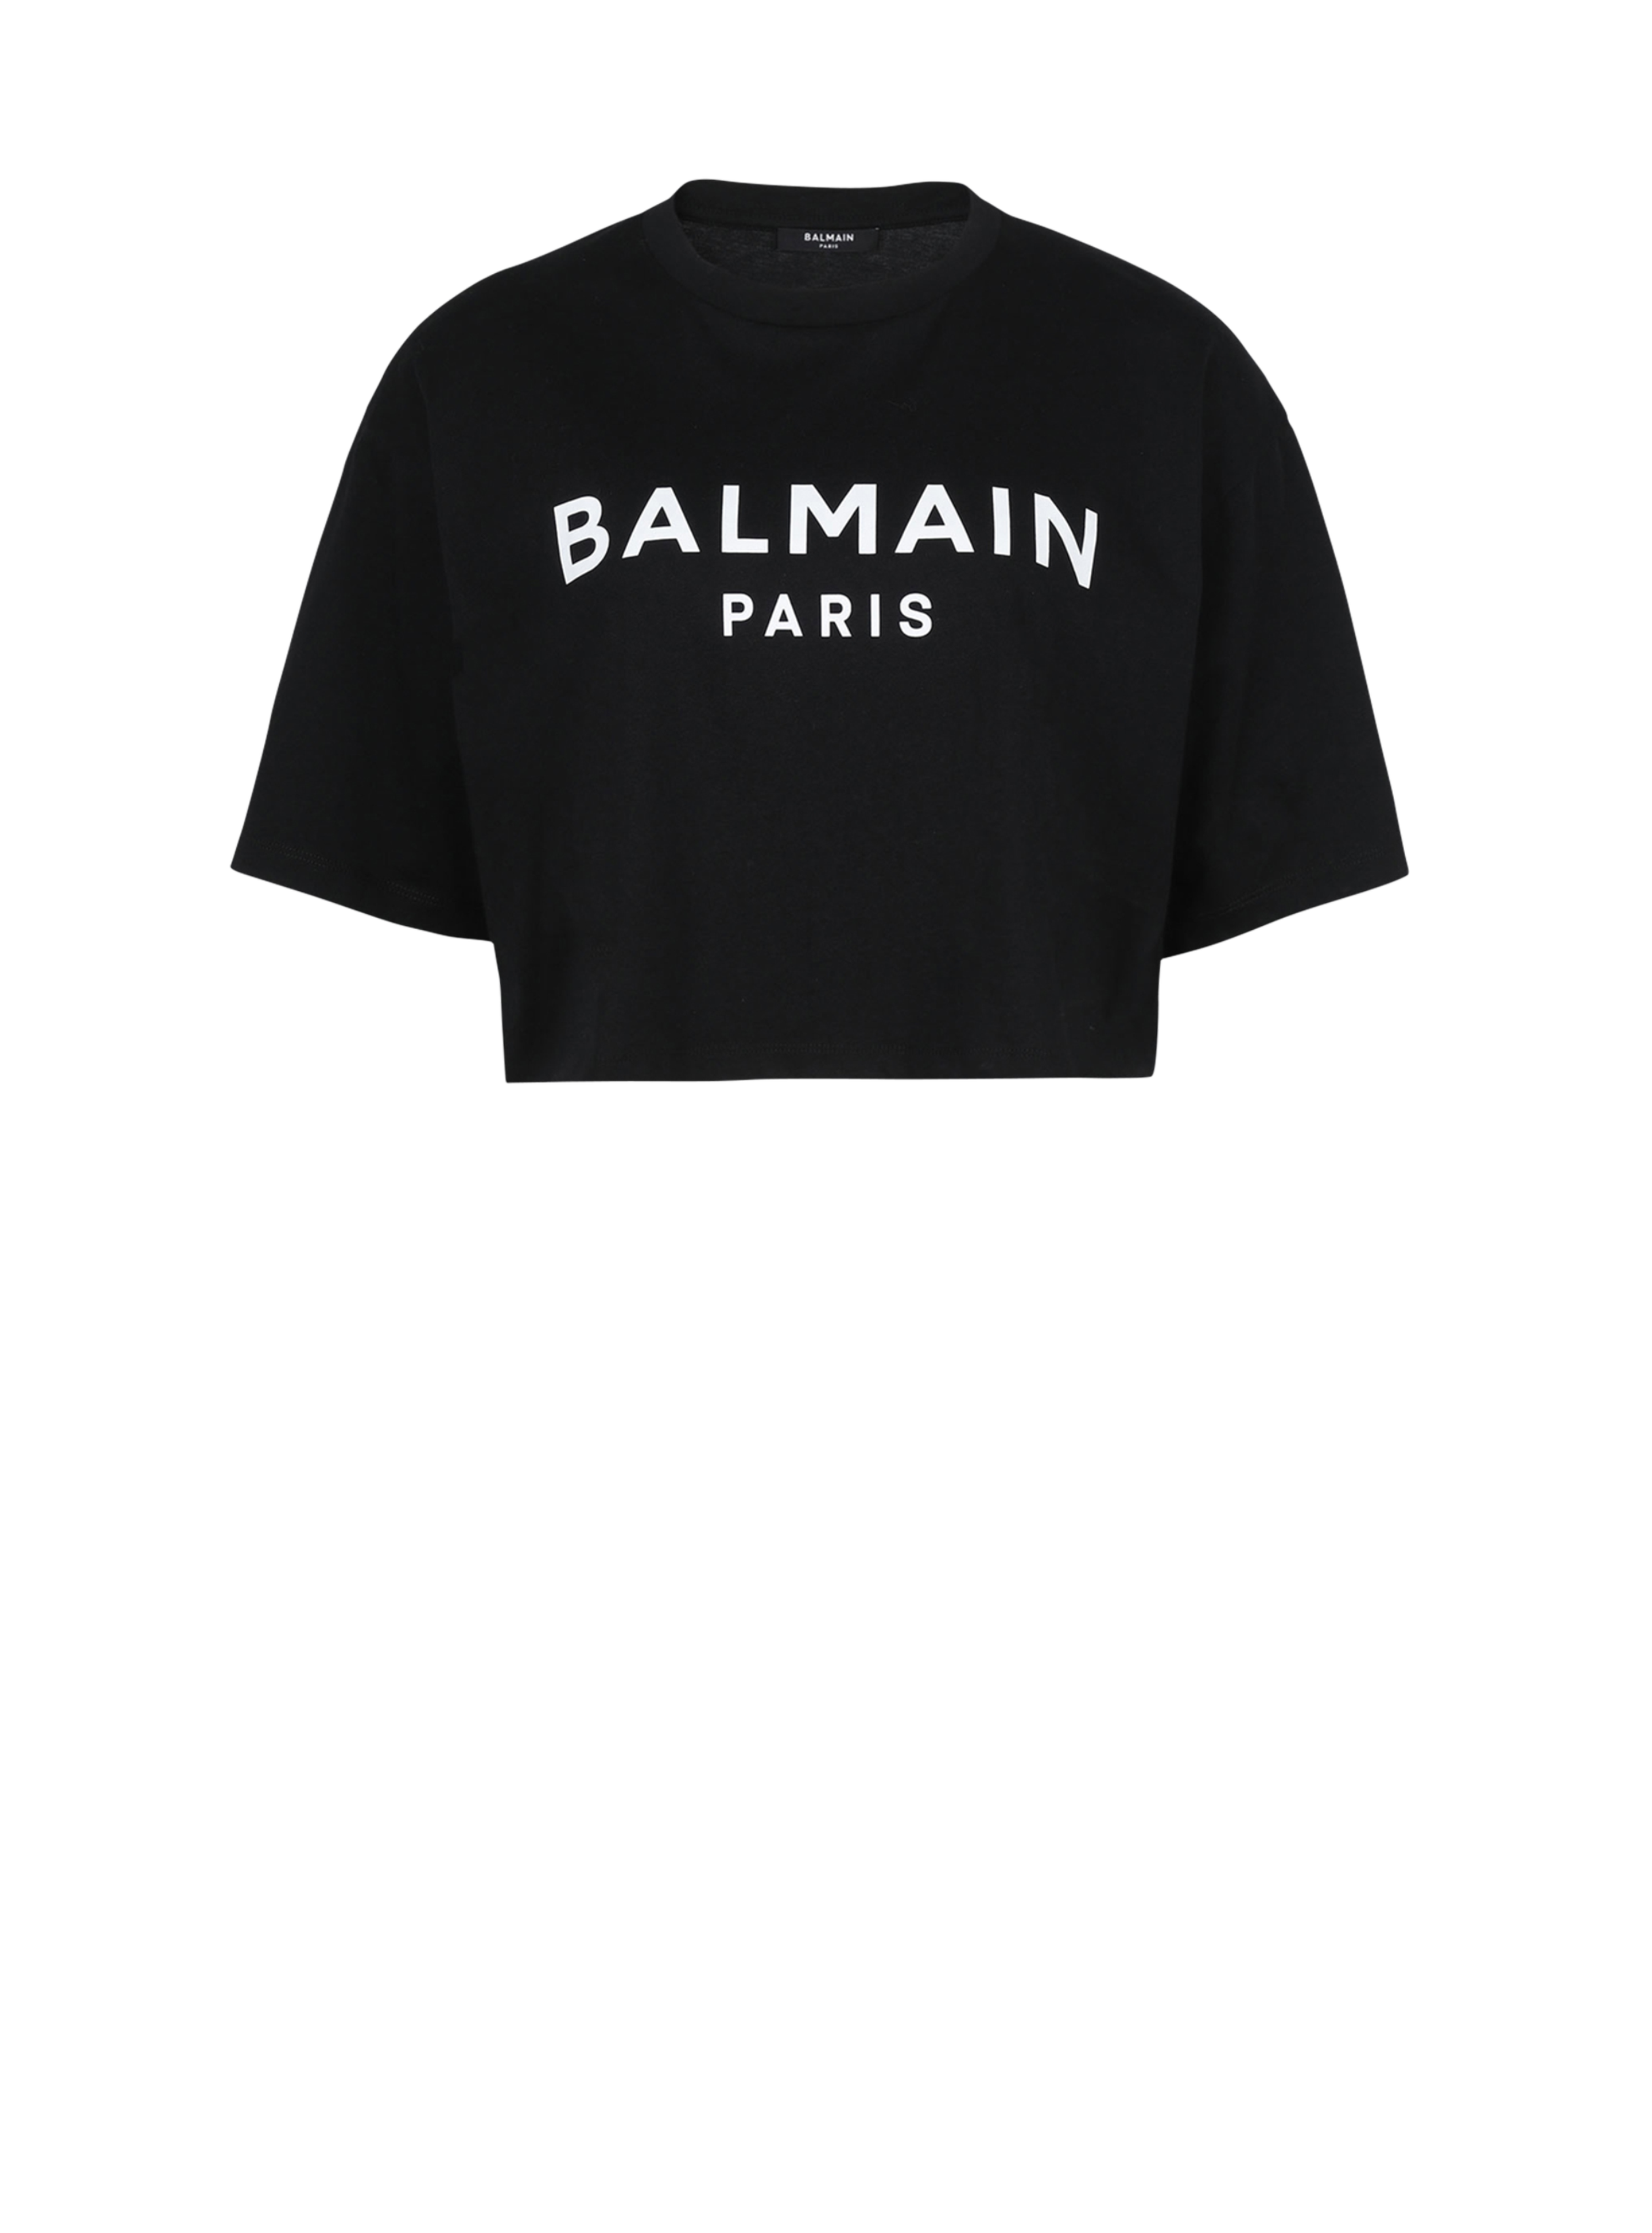 Eco-responsible cropped cotton T-shirt with Balmain logo print, black